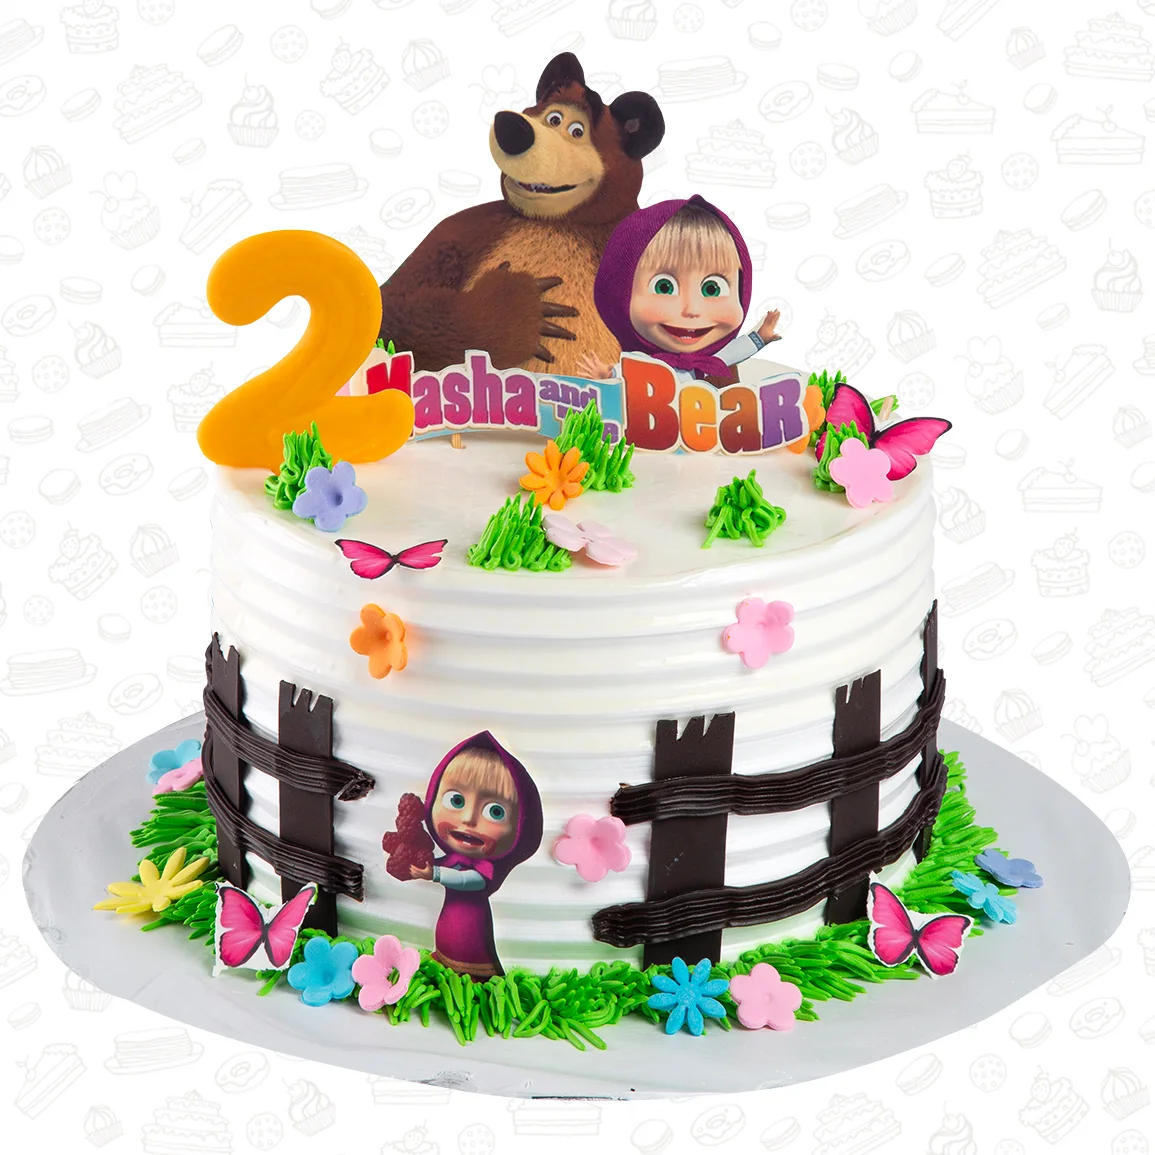 Masha and the bear cake | Bear cakes, Masha and the bear, Cake